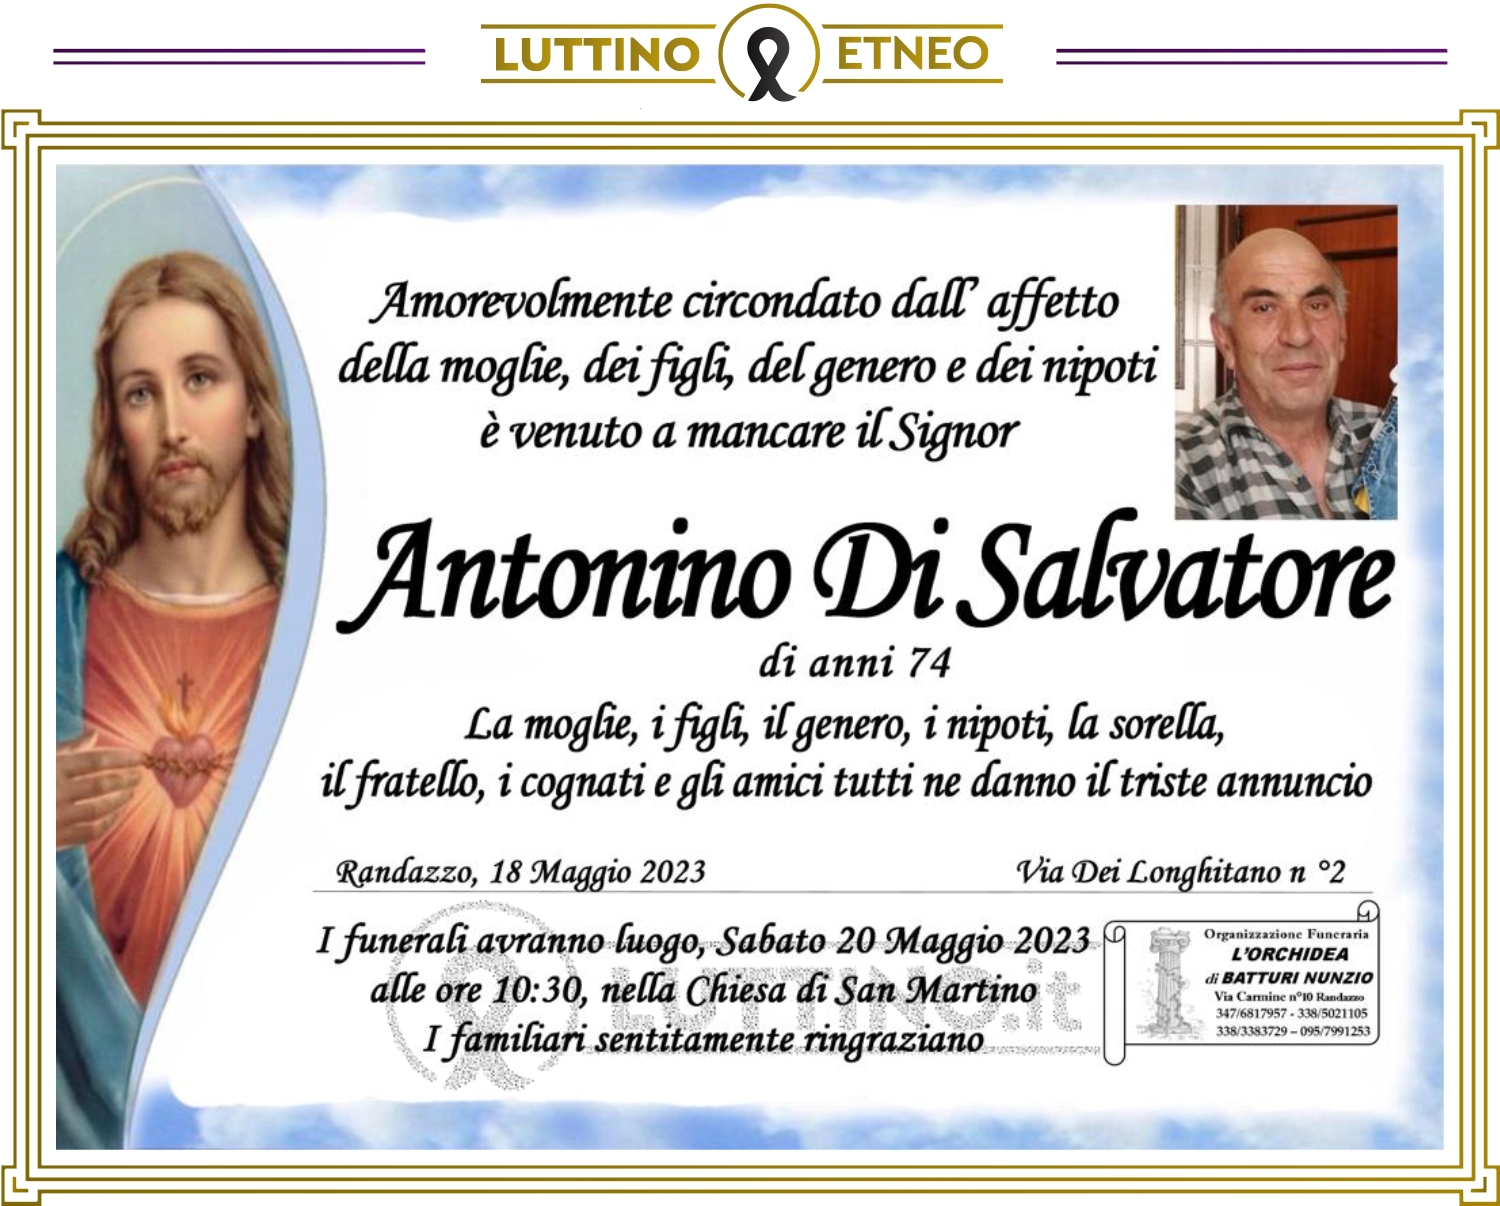 Antonino Di Salvatore